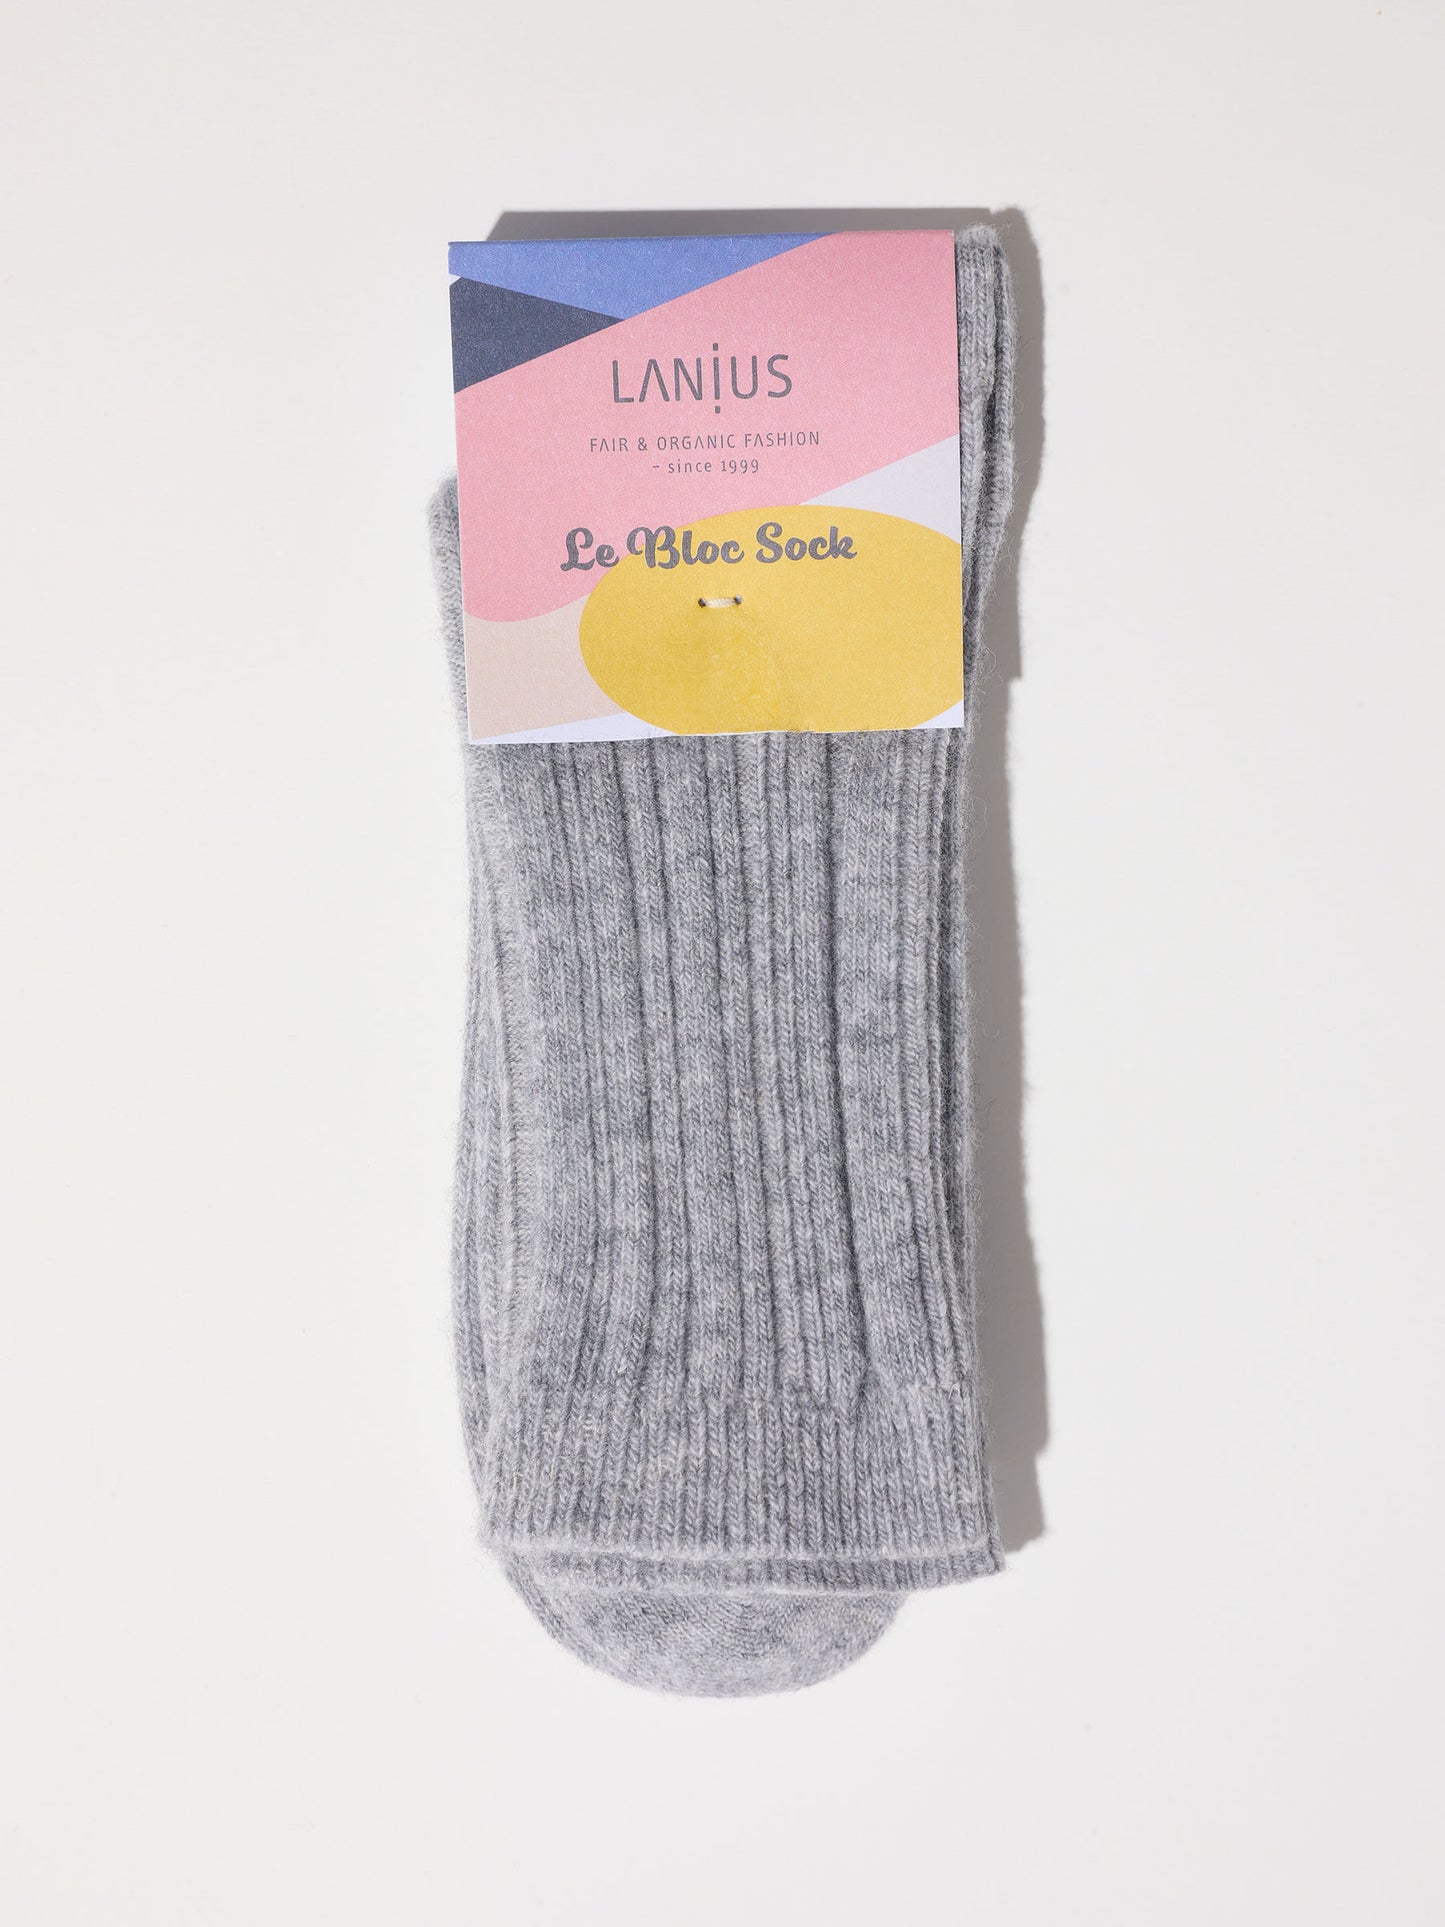 Load image into Gallery viewer, Rib Knit Socks GOTS - Grey Melange
